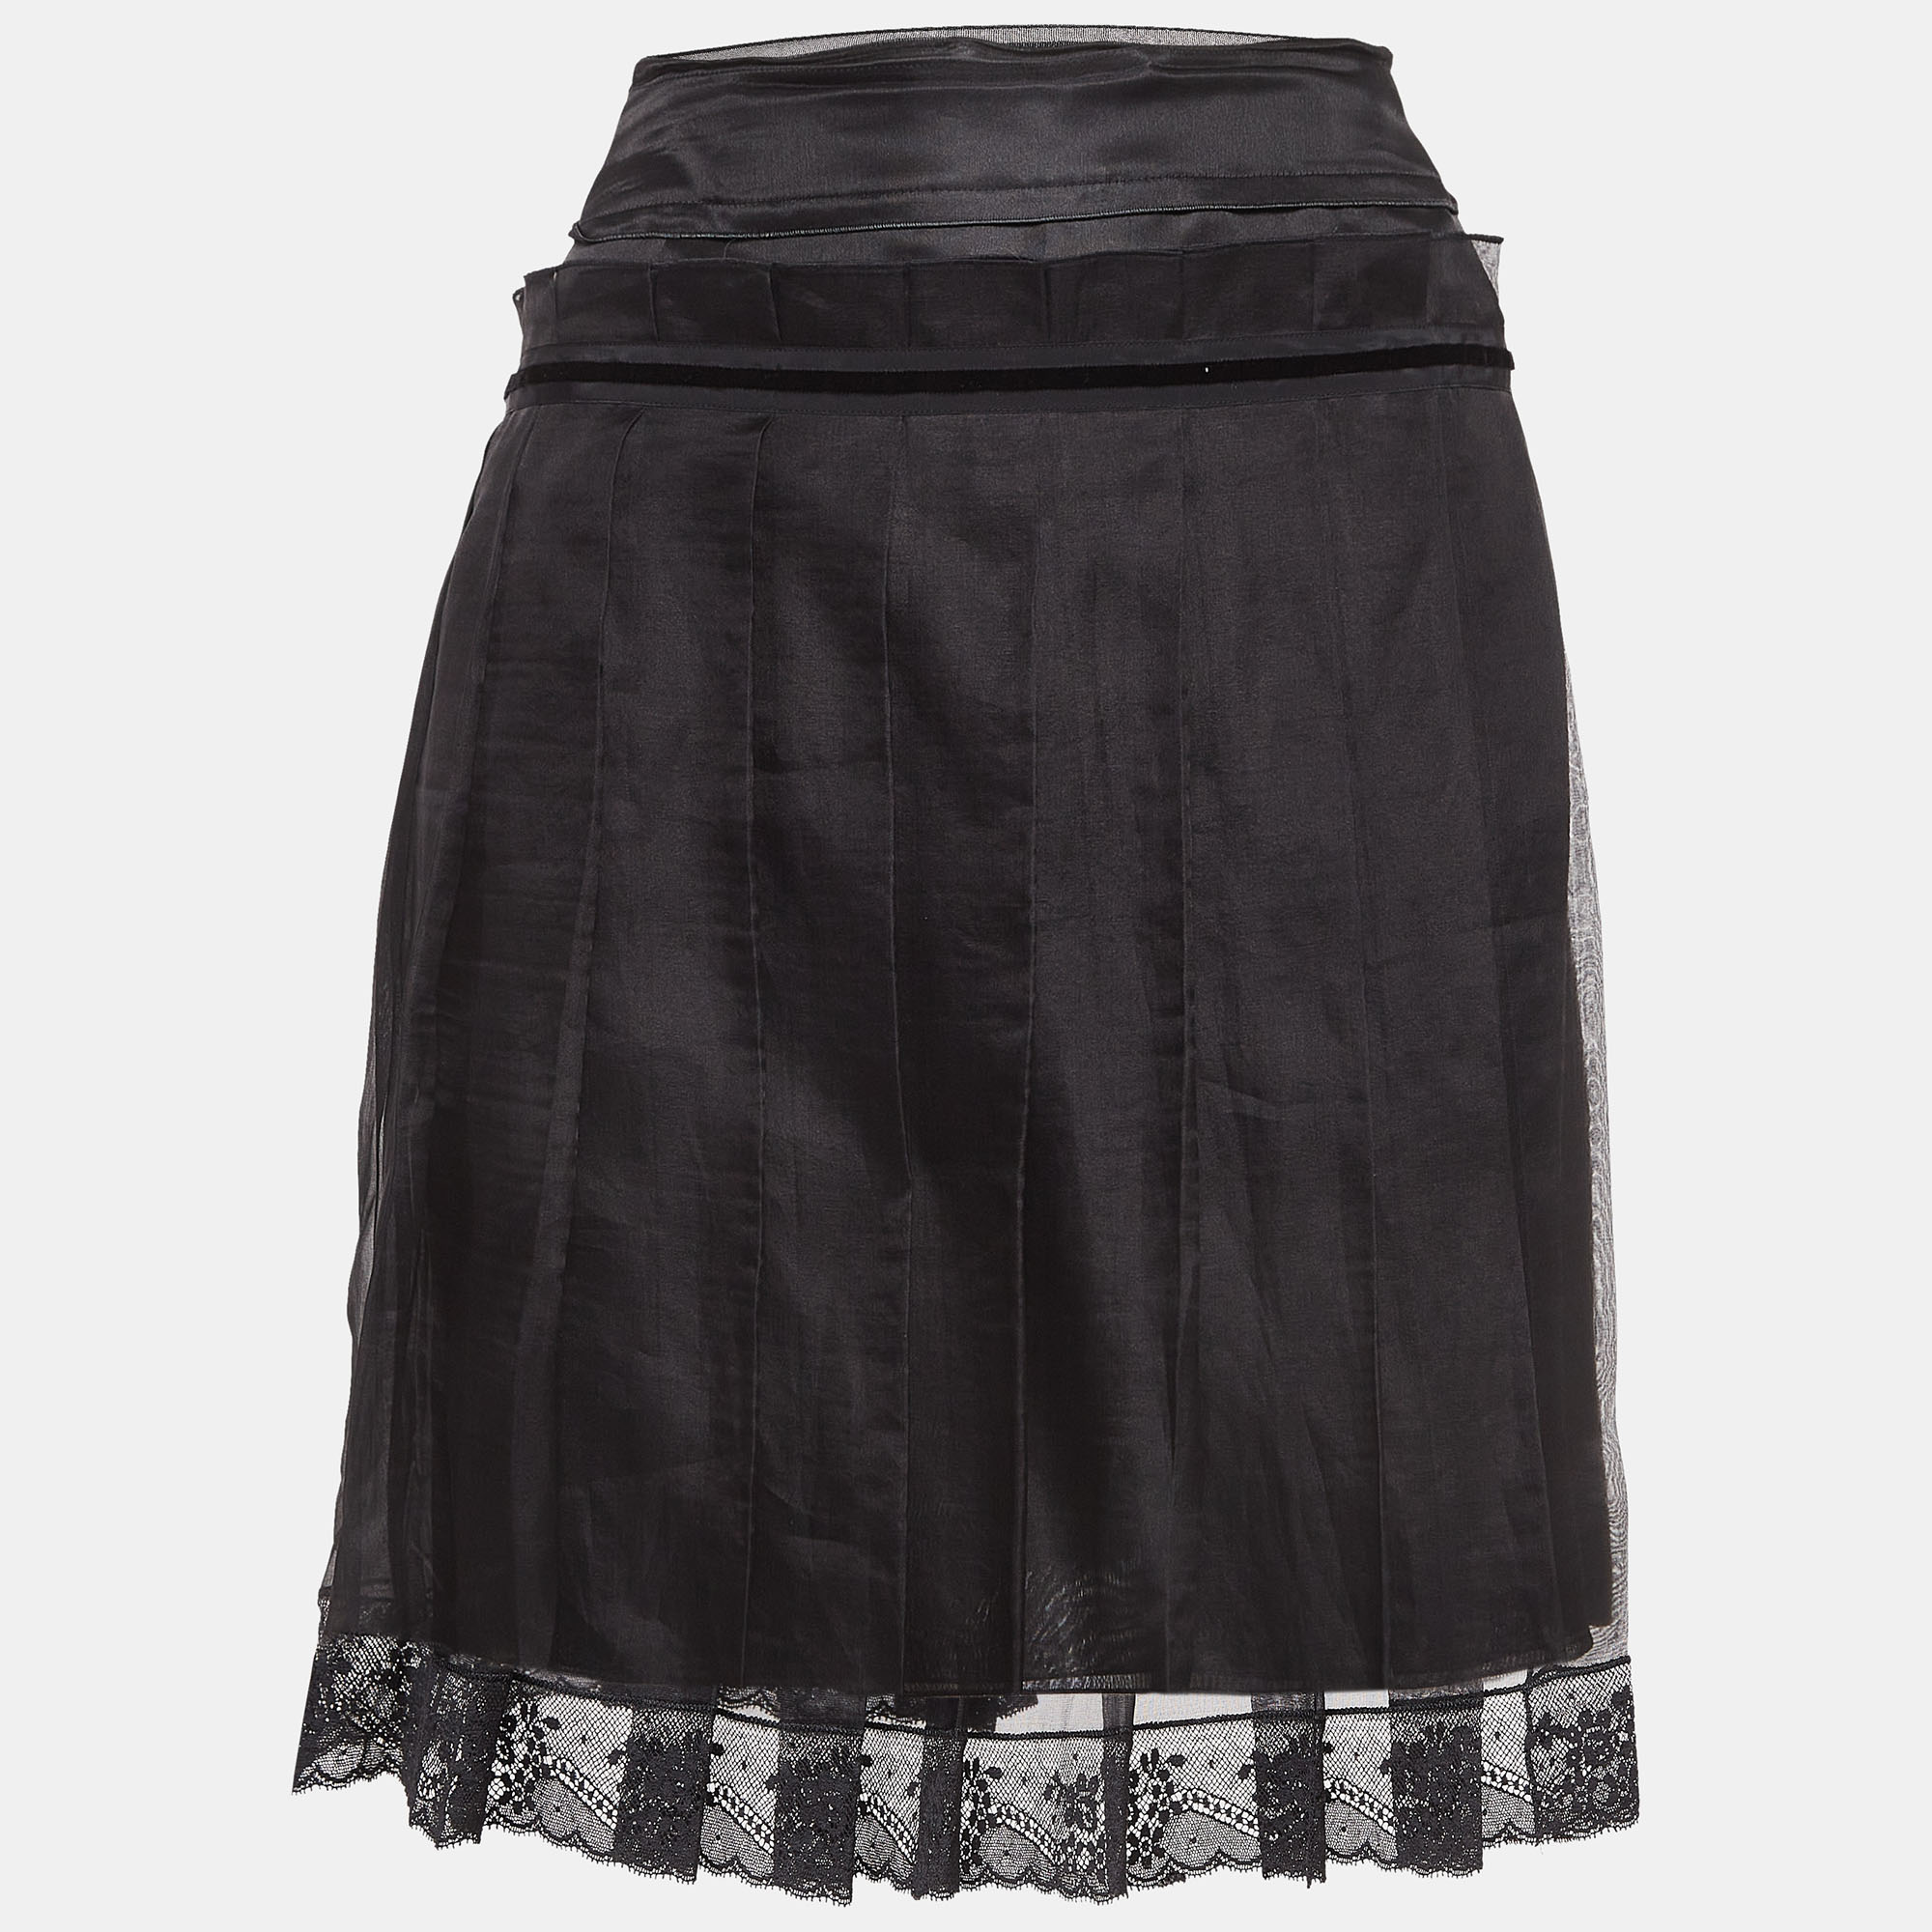 D&g black lace and velvet trim silk pleated mini skirt l